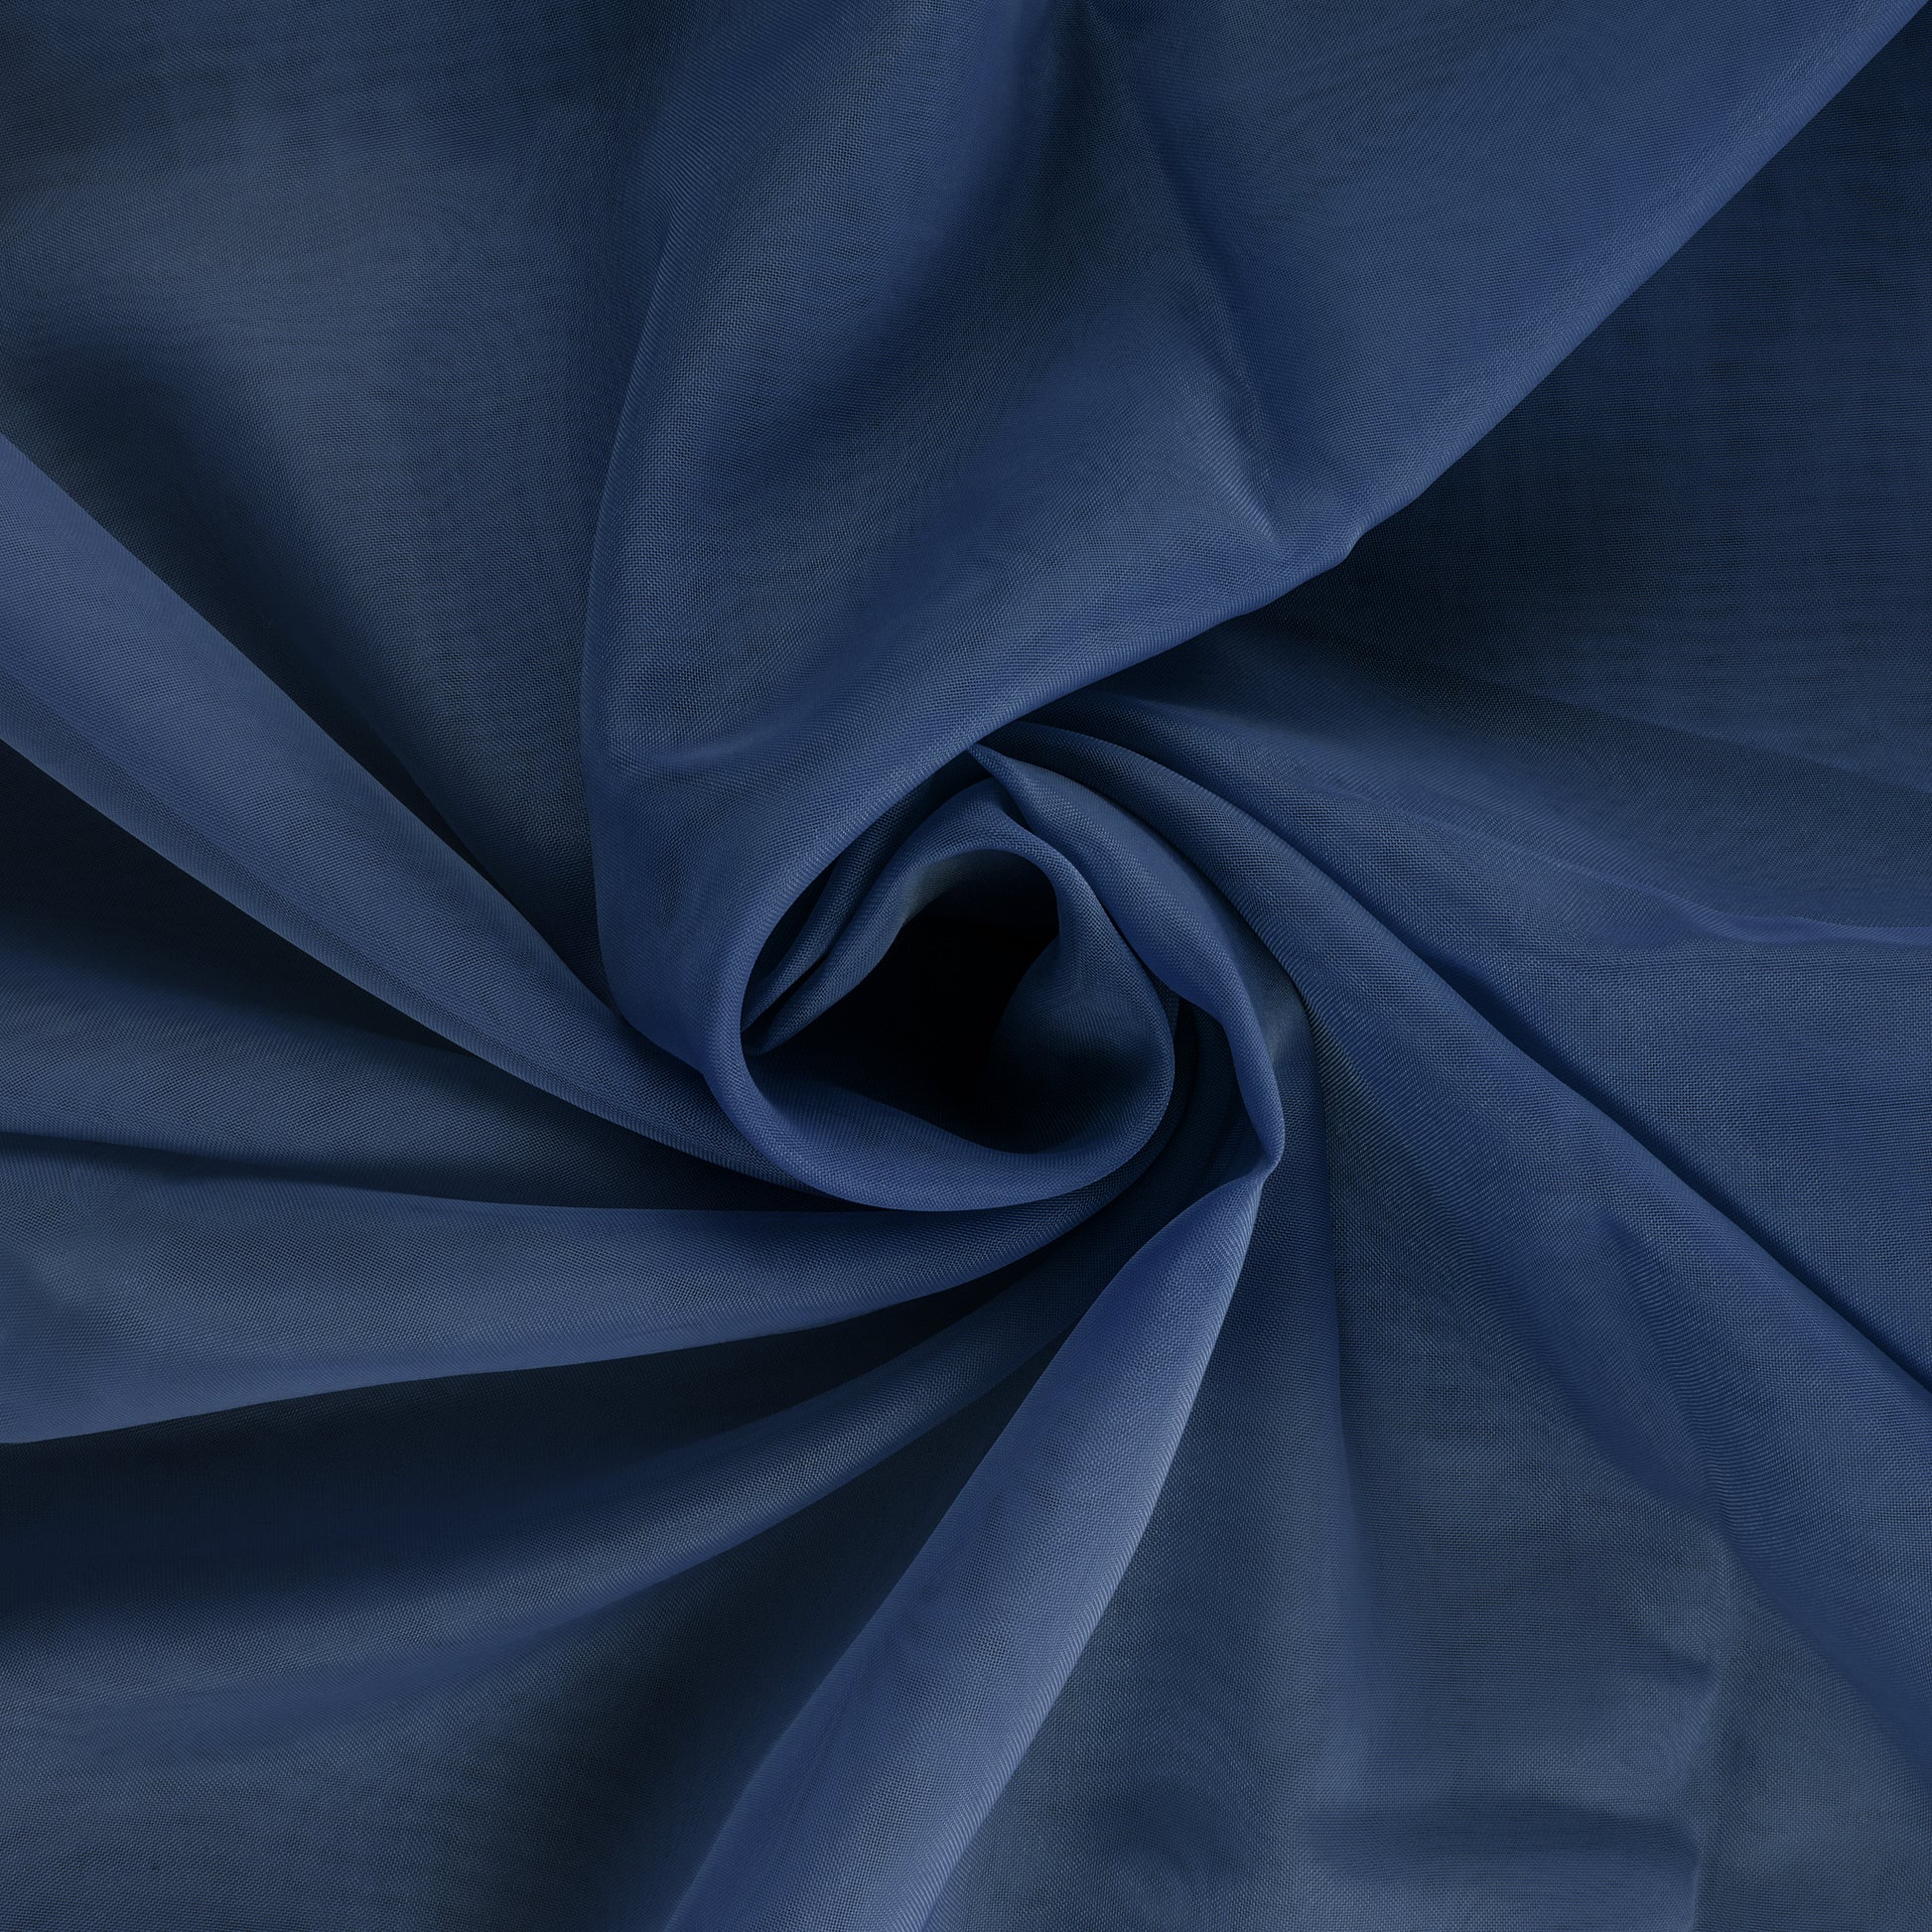 10 yards x 118" Flame Retardant (FR) Voile Sheer Fabric Roll/Bolt - Navy Blue - CV Linens